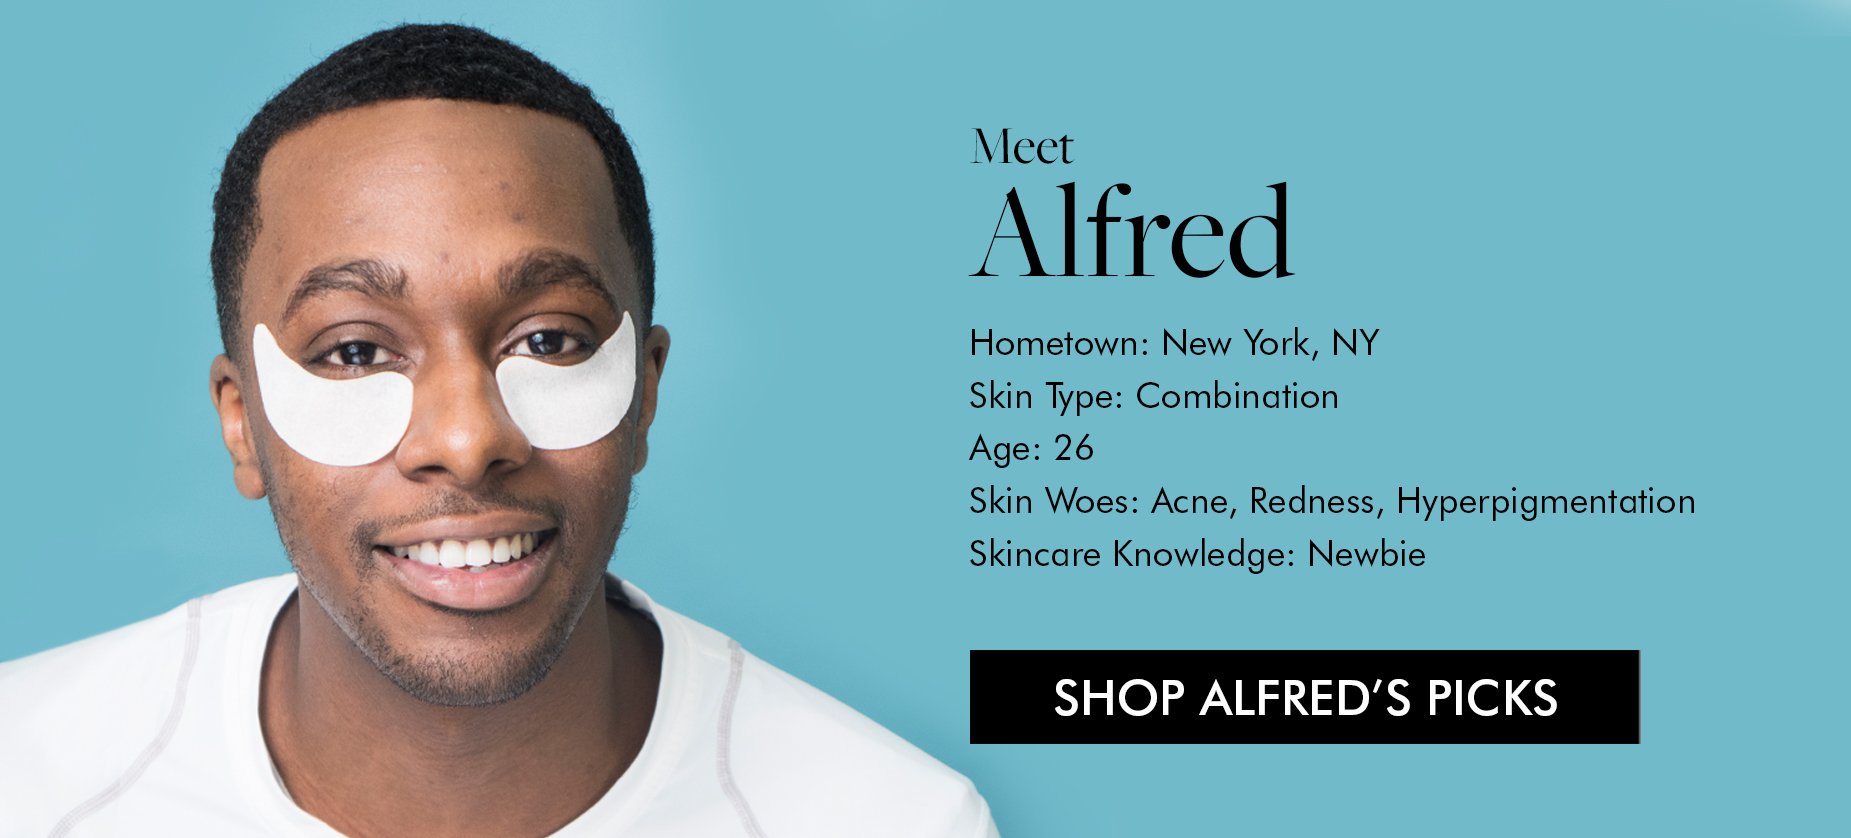 Shop Alfred's Picks